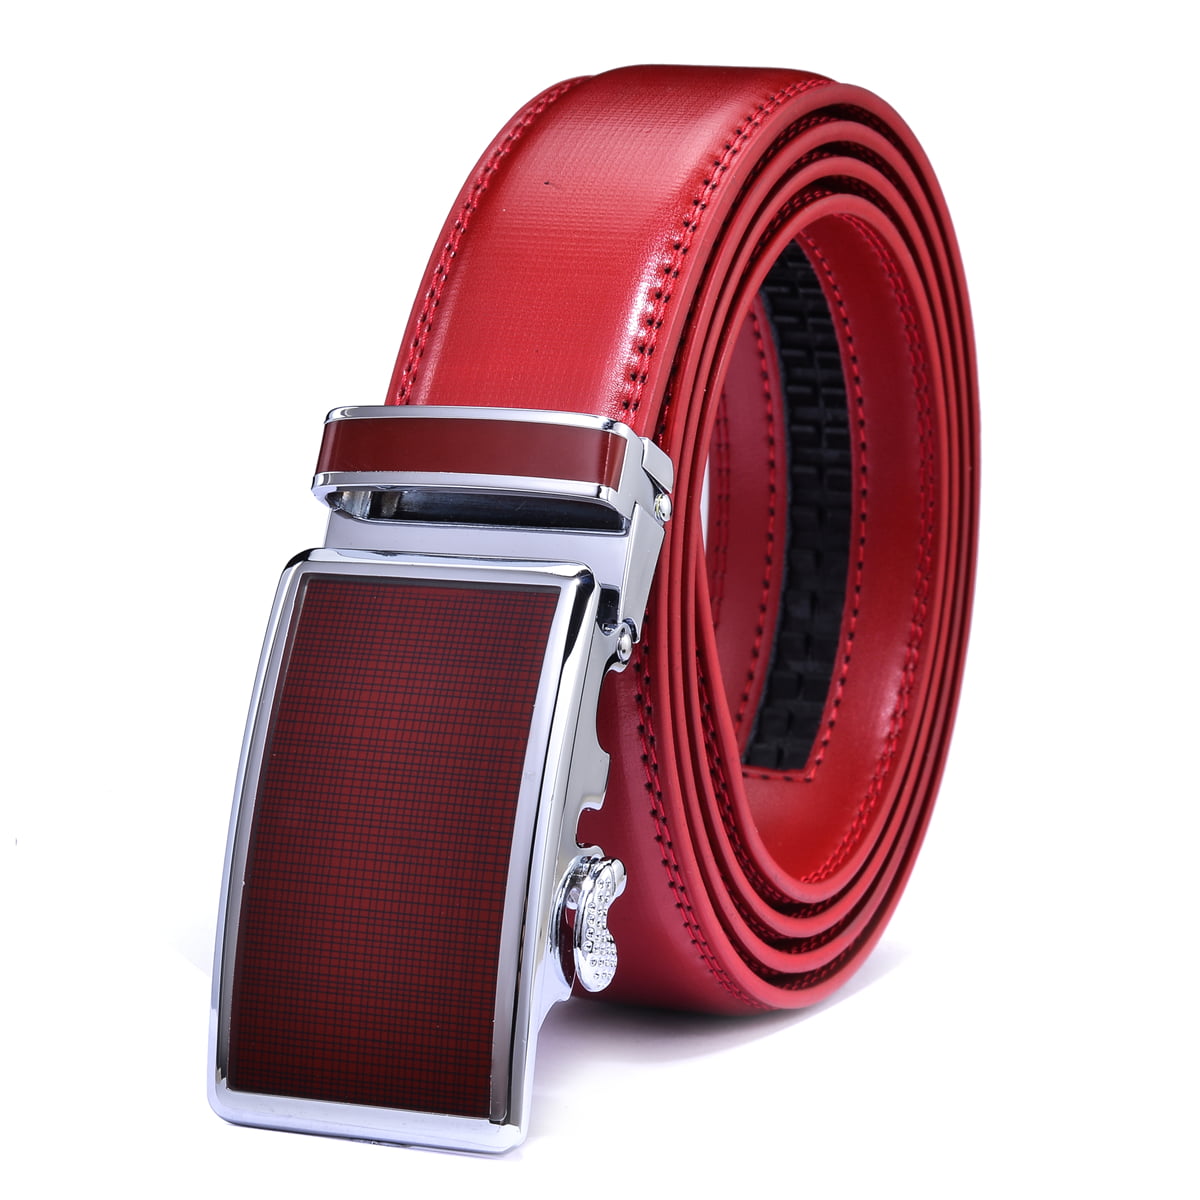 XGeek - XGEEK Men's Ratchet Belt with Genuine Leather, Slide Belt for ...